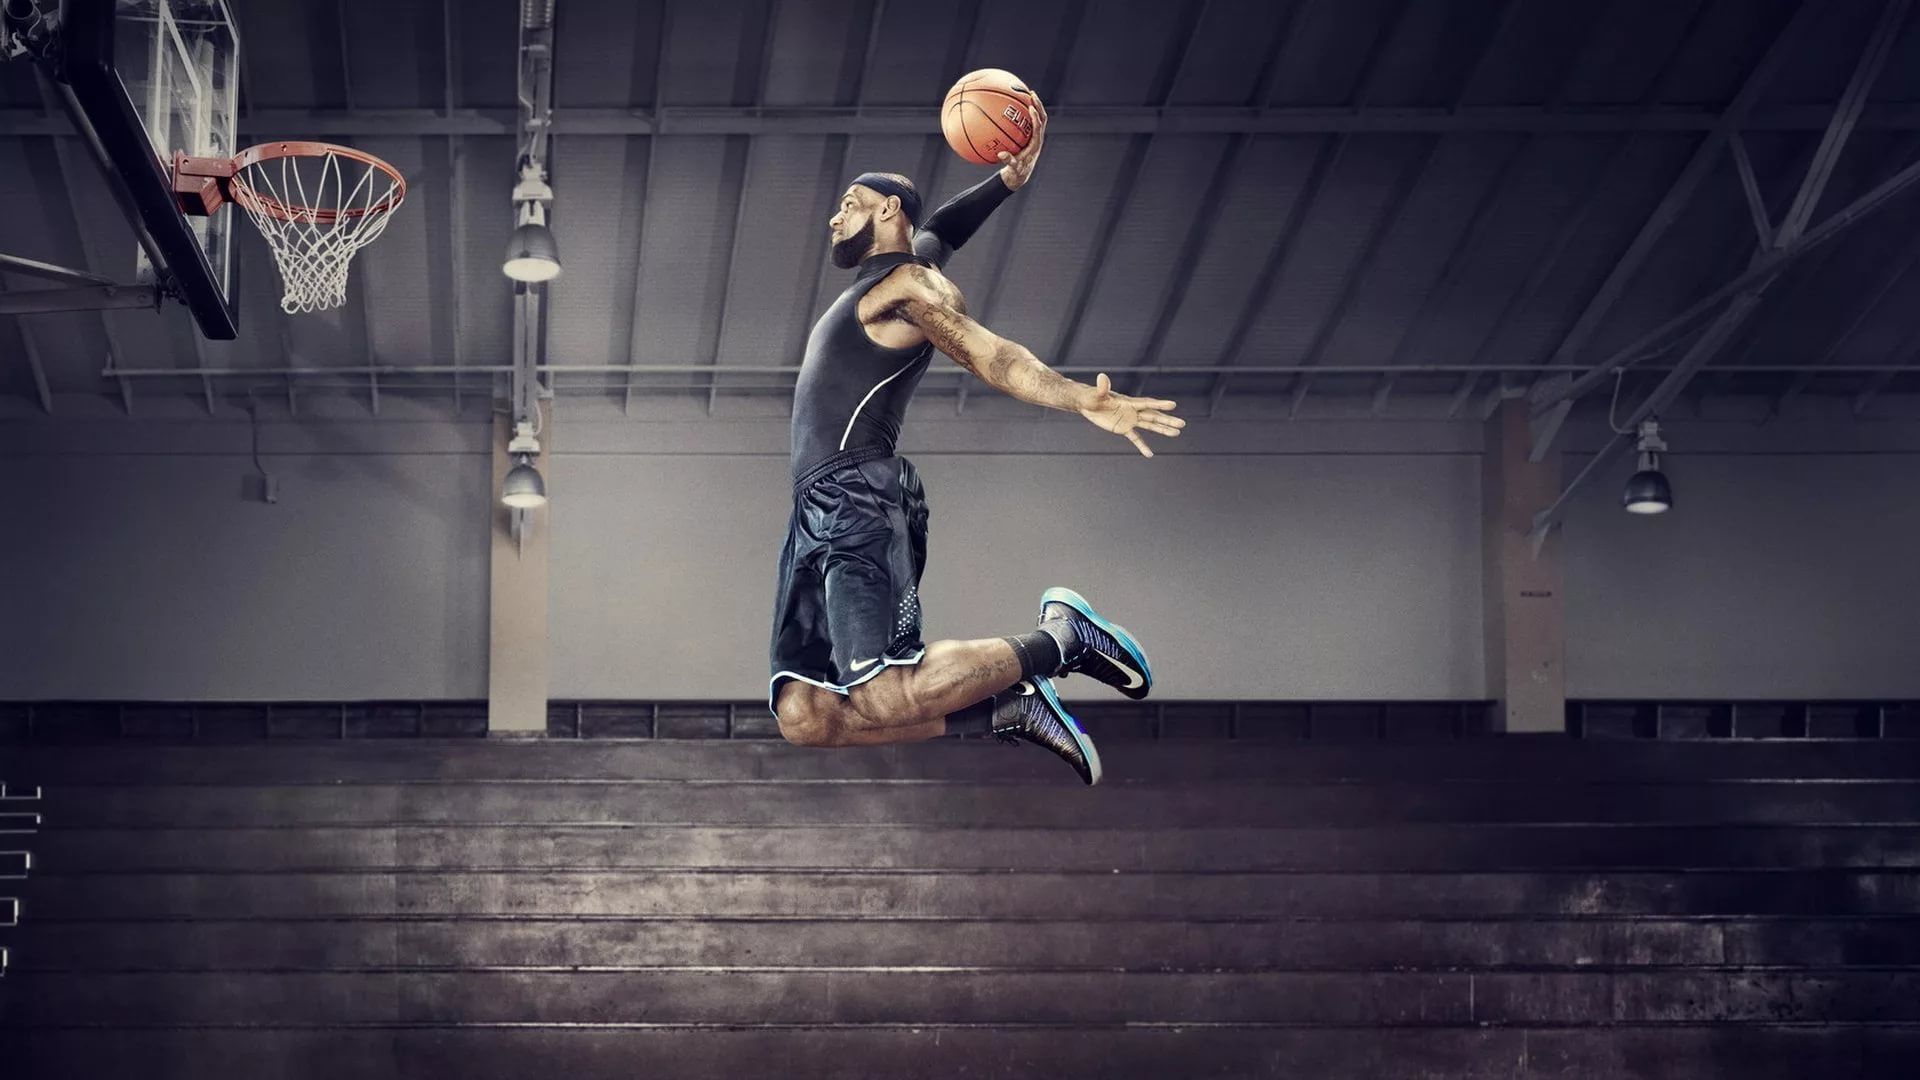 Nike Basketball download wallpaper image